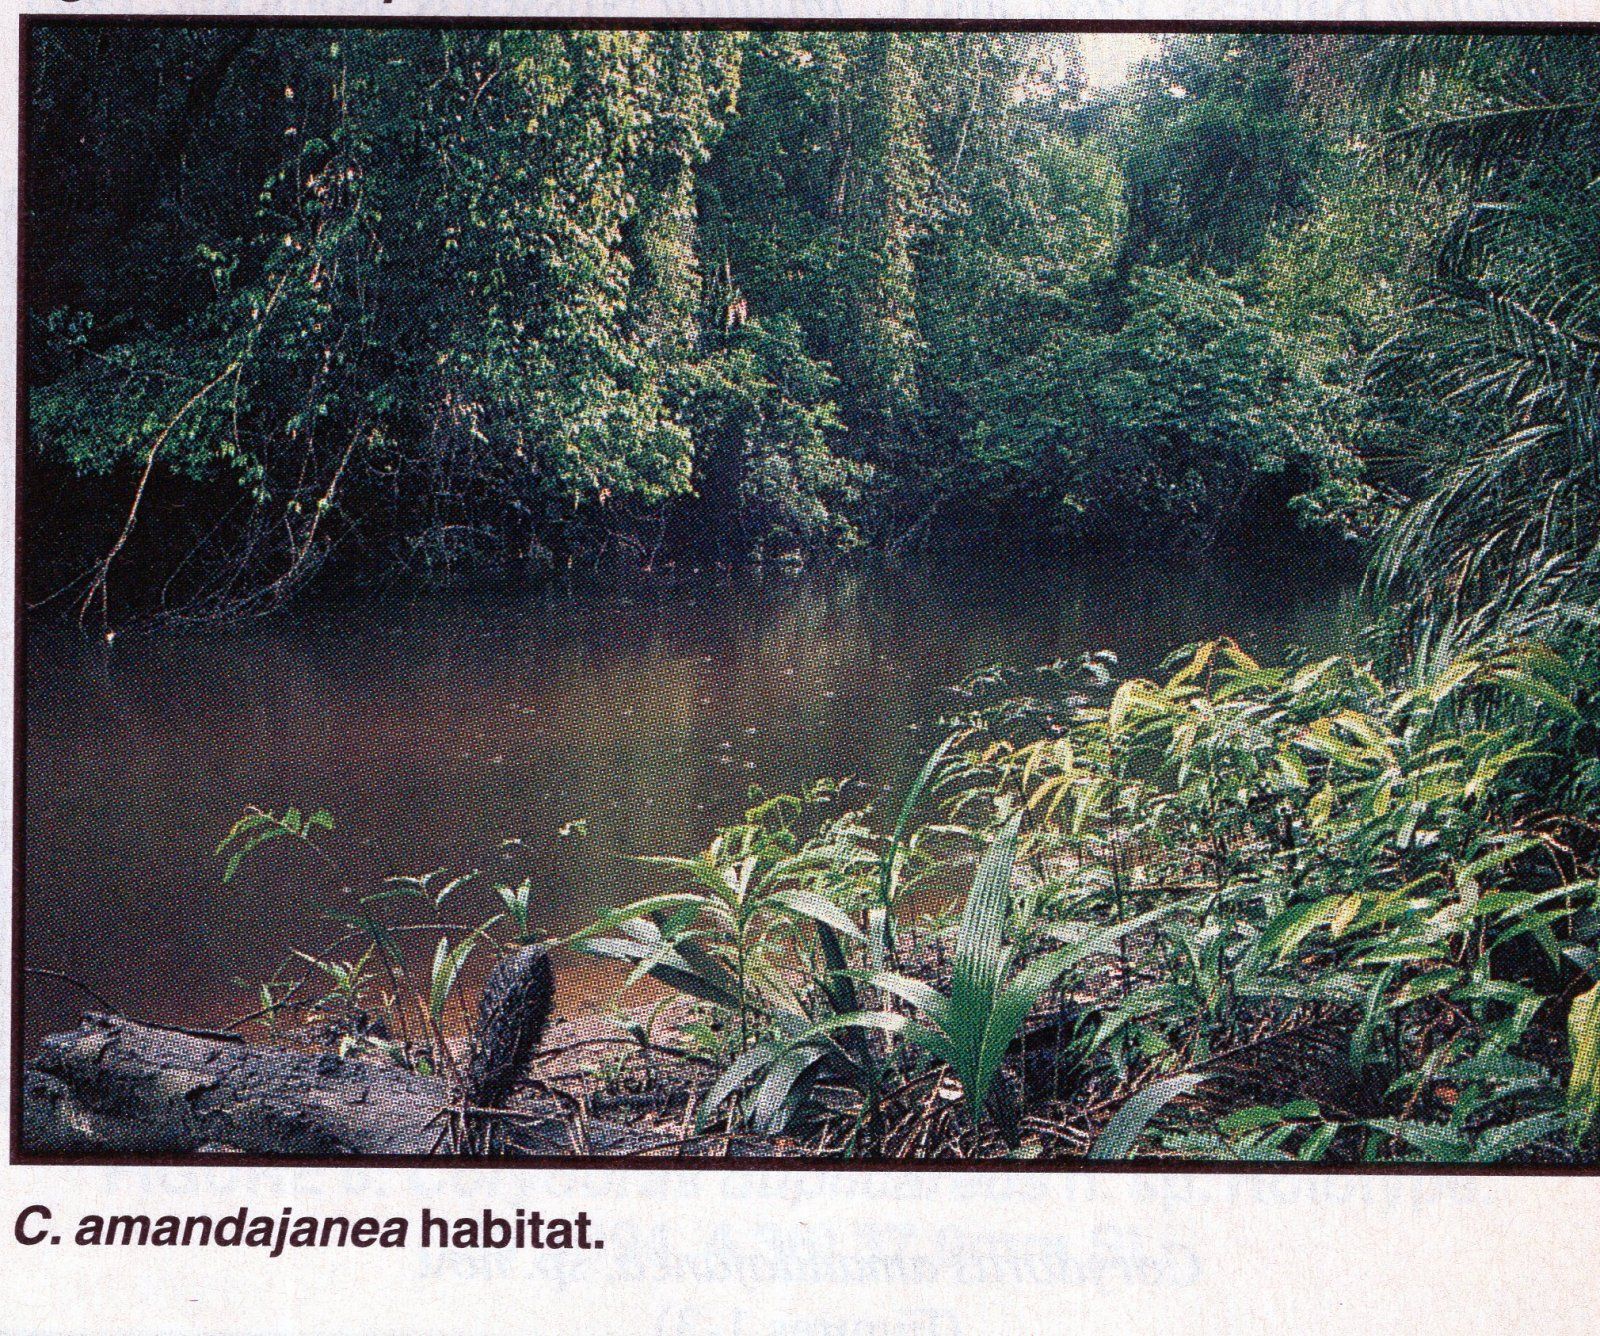 Upper Rio Negro Corydoras habitat499.jpg